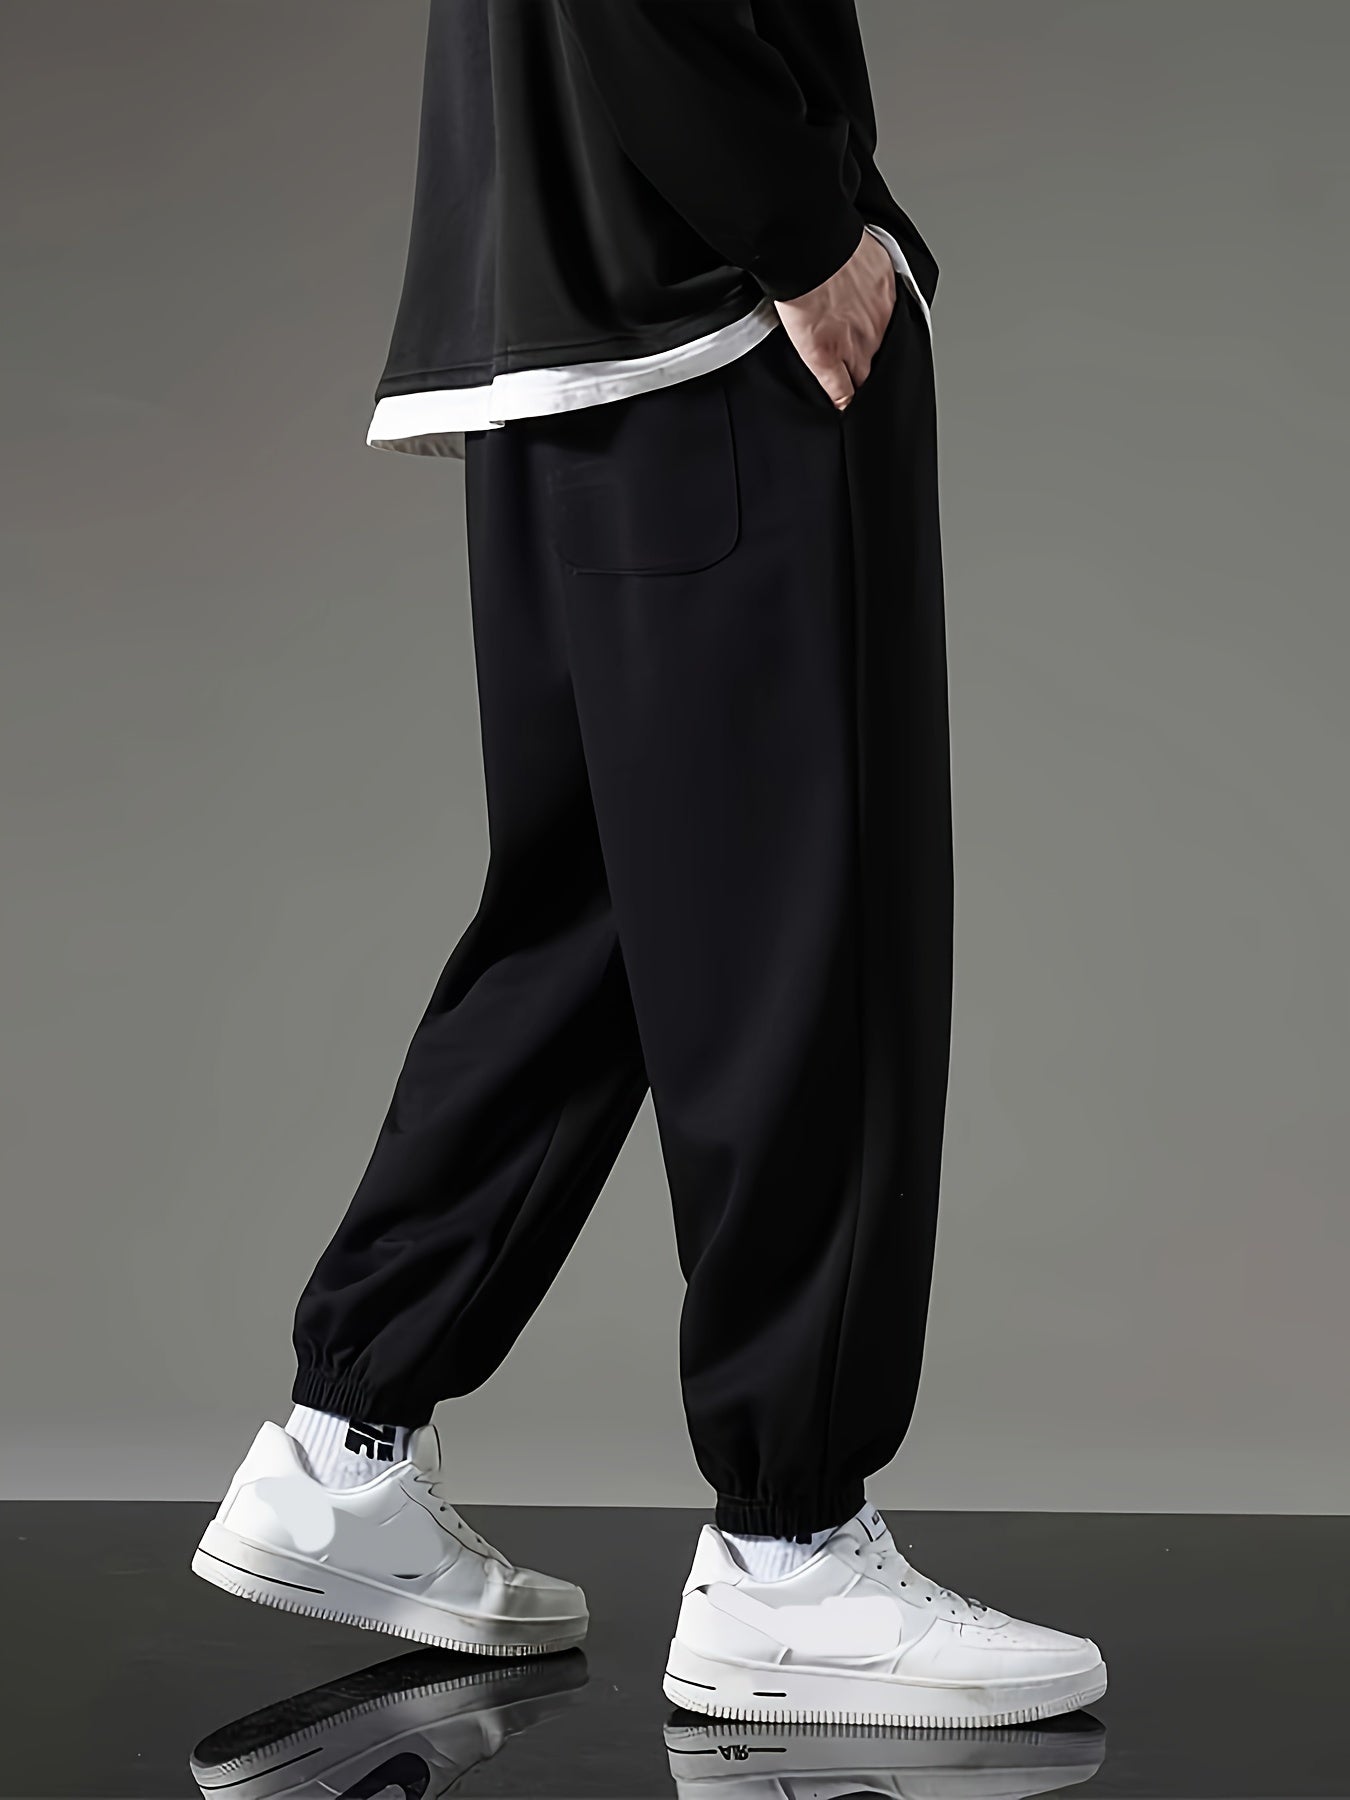 Men's Casual Jogger Pants with Drawstring Waist, Medium Stretch Fabric